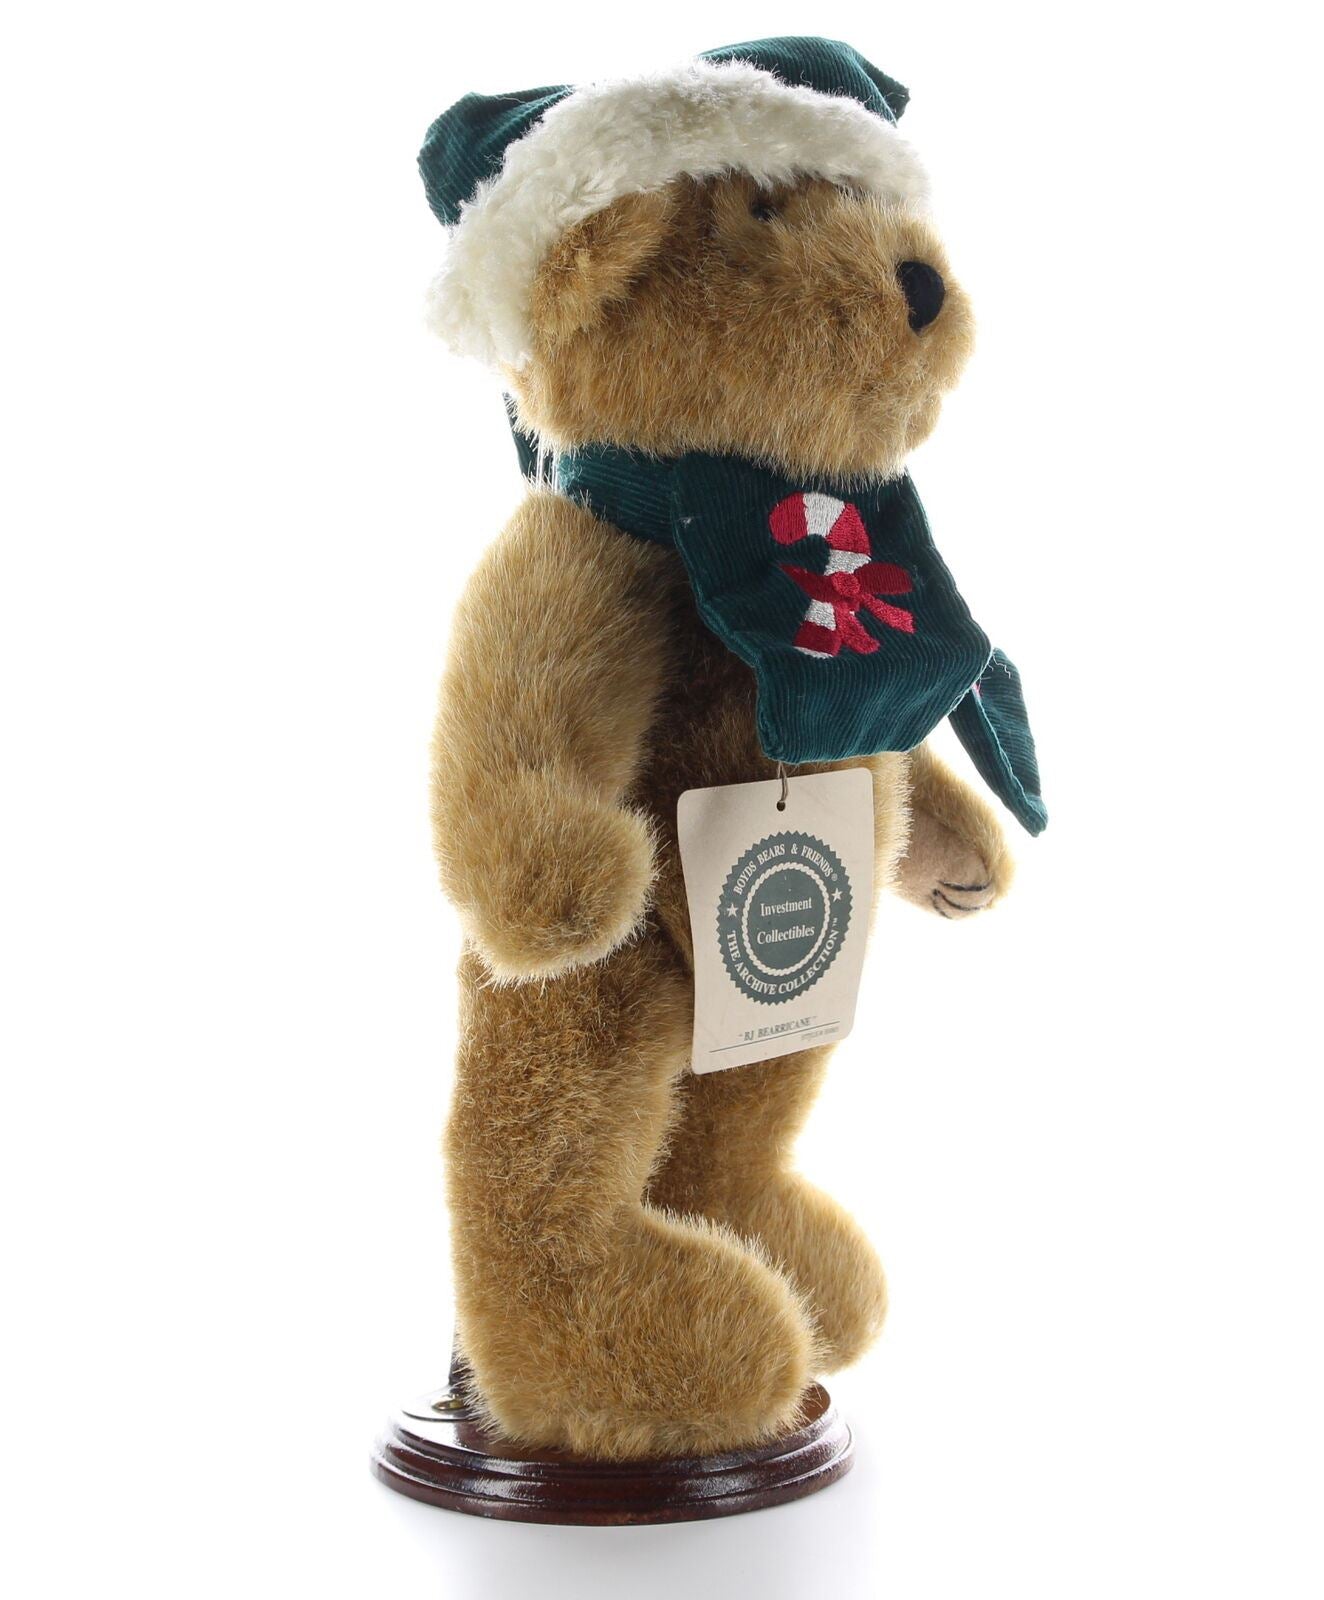 Boyds Bears Christmas Plush w/ Cert BJ Bearricane Style 83003 Archive Collection